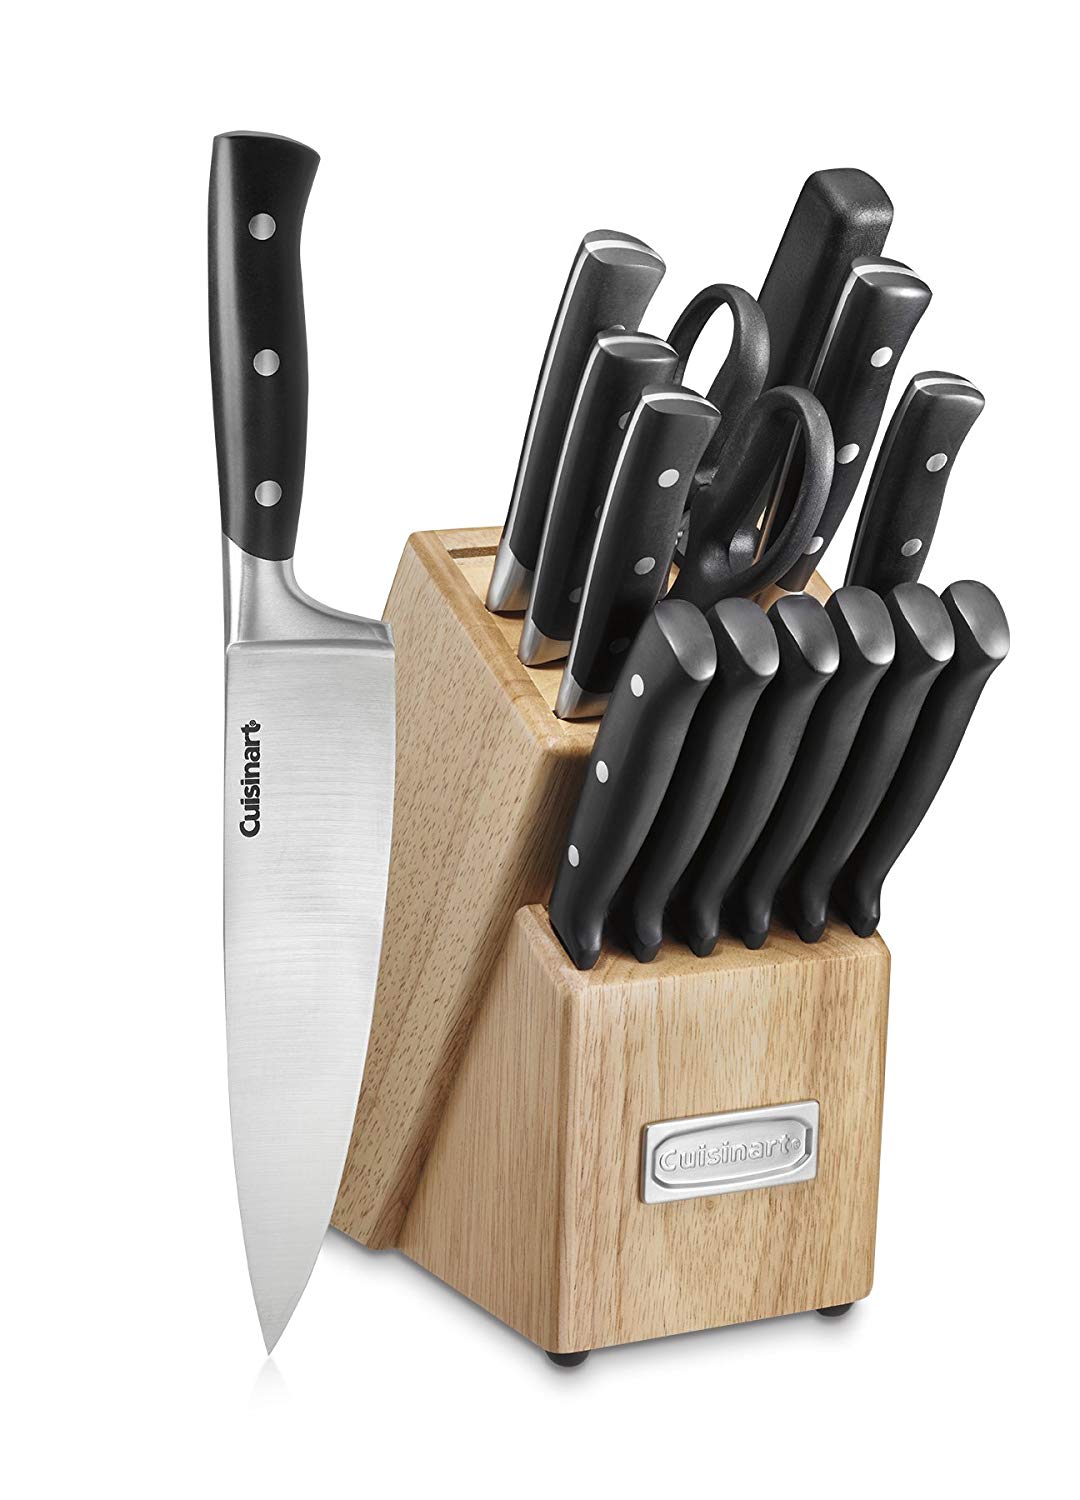 https://www.usmagazine.com/wp-content/uploads/2019/07/Cuisinart-15-Piece-Knife-Block-Set.jpg?quality=86&strip=all